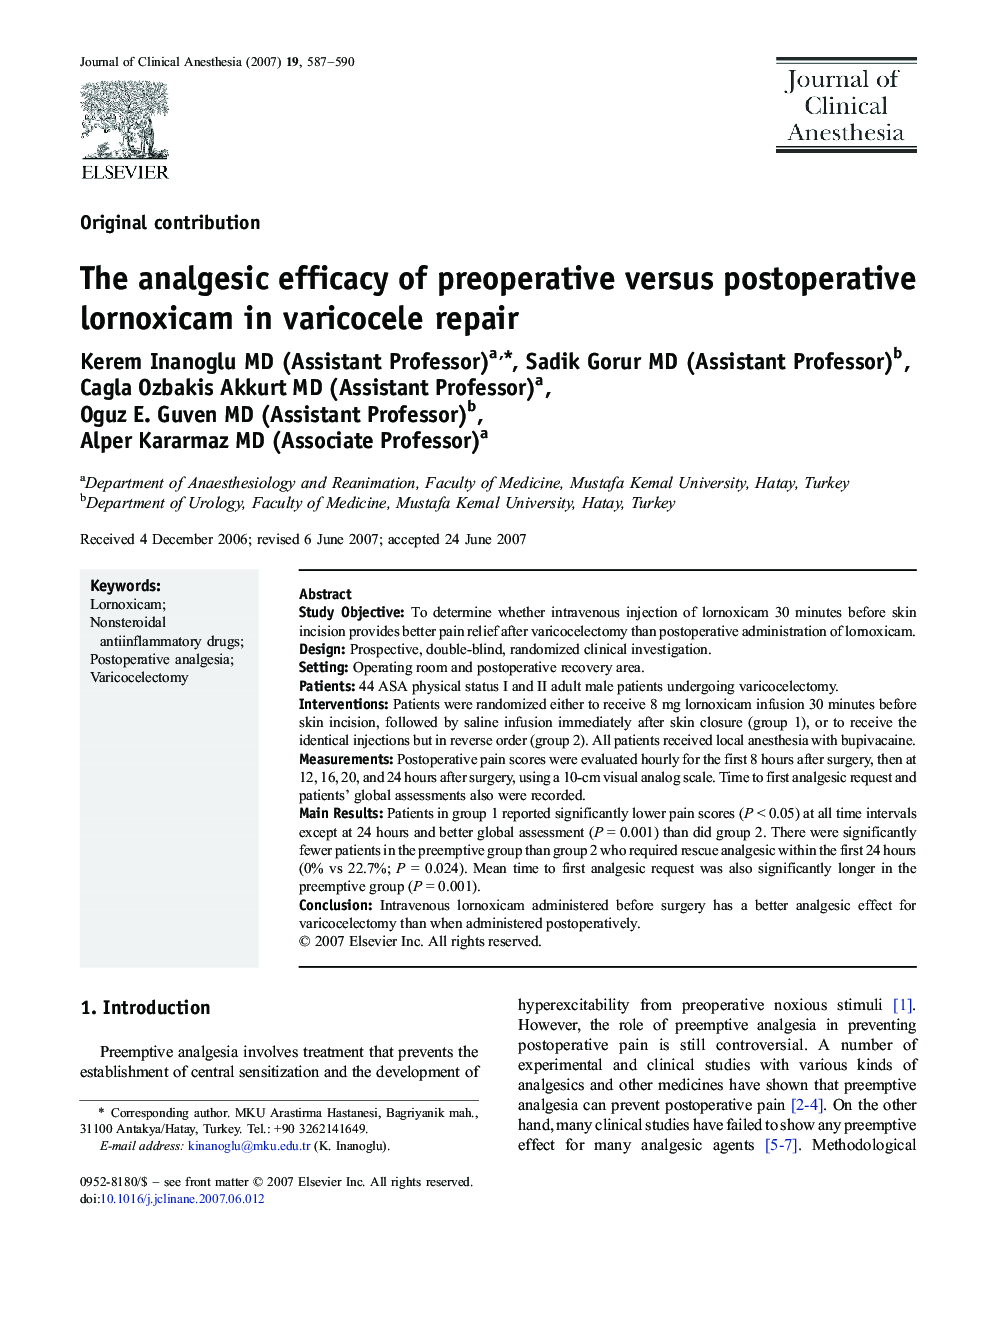 The analgesic efficacy of preoperative versus postoperative lornoxicam in varicocele repair